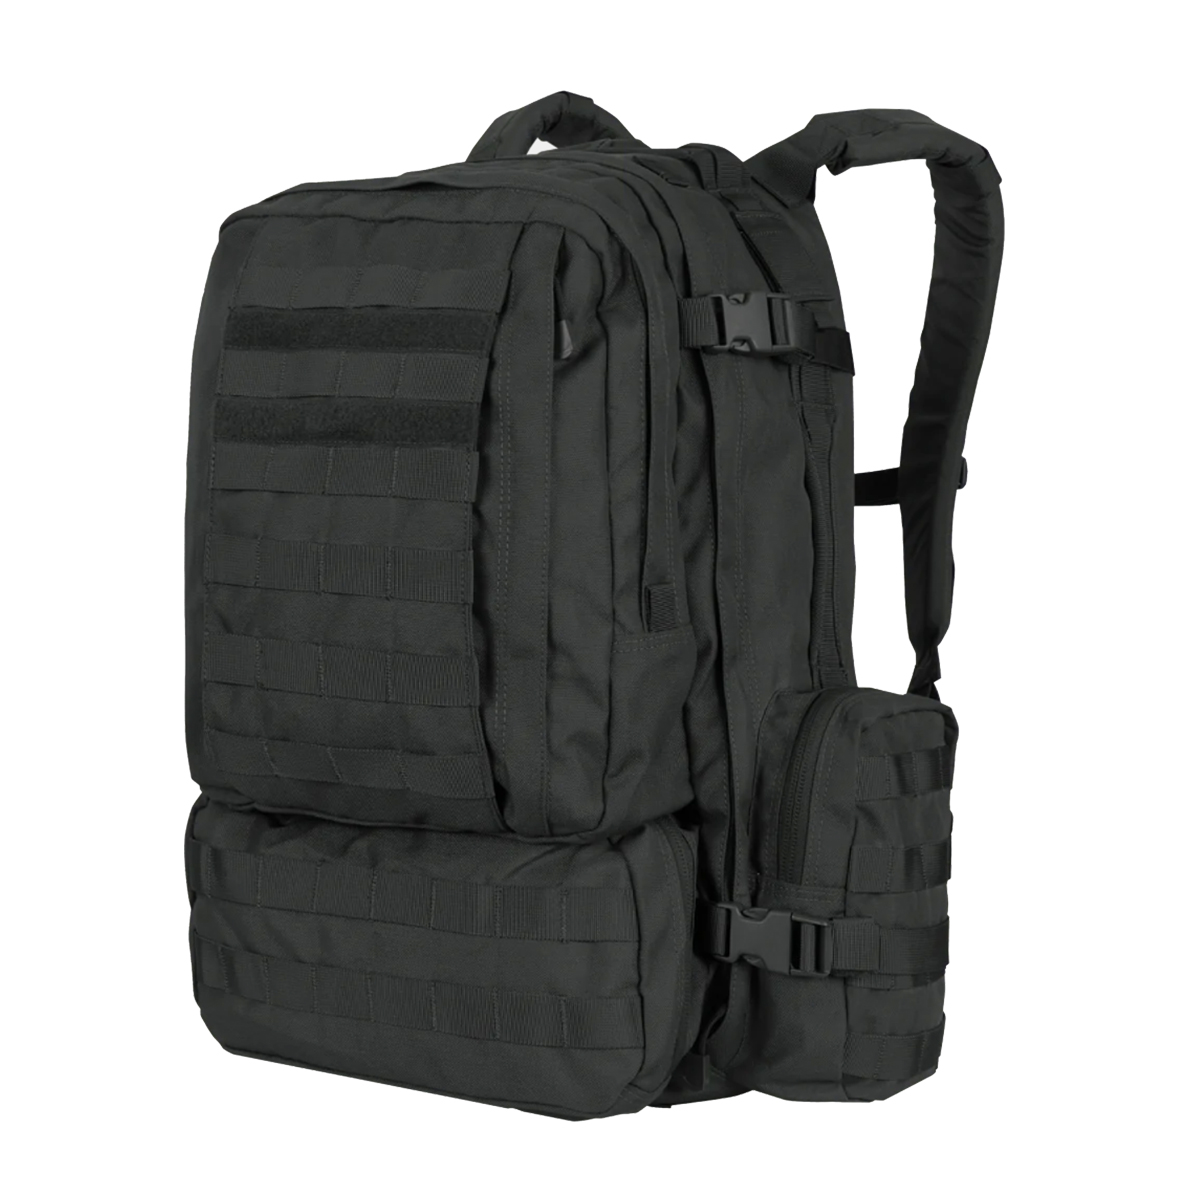 Panorama Continuo Inspeccionar 3 Day Assault Pack | Large Tactical Backpack | RMA Armament